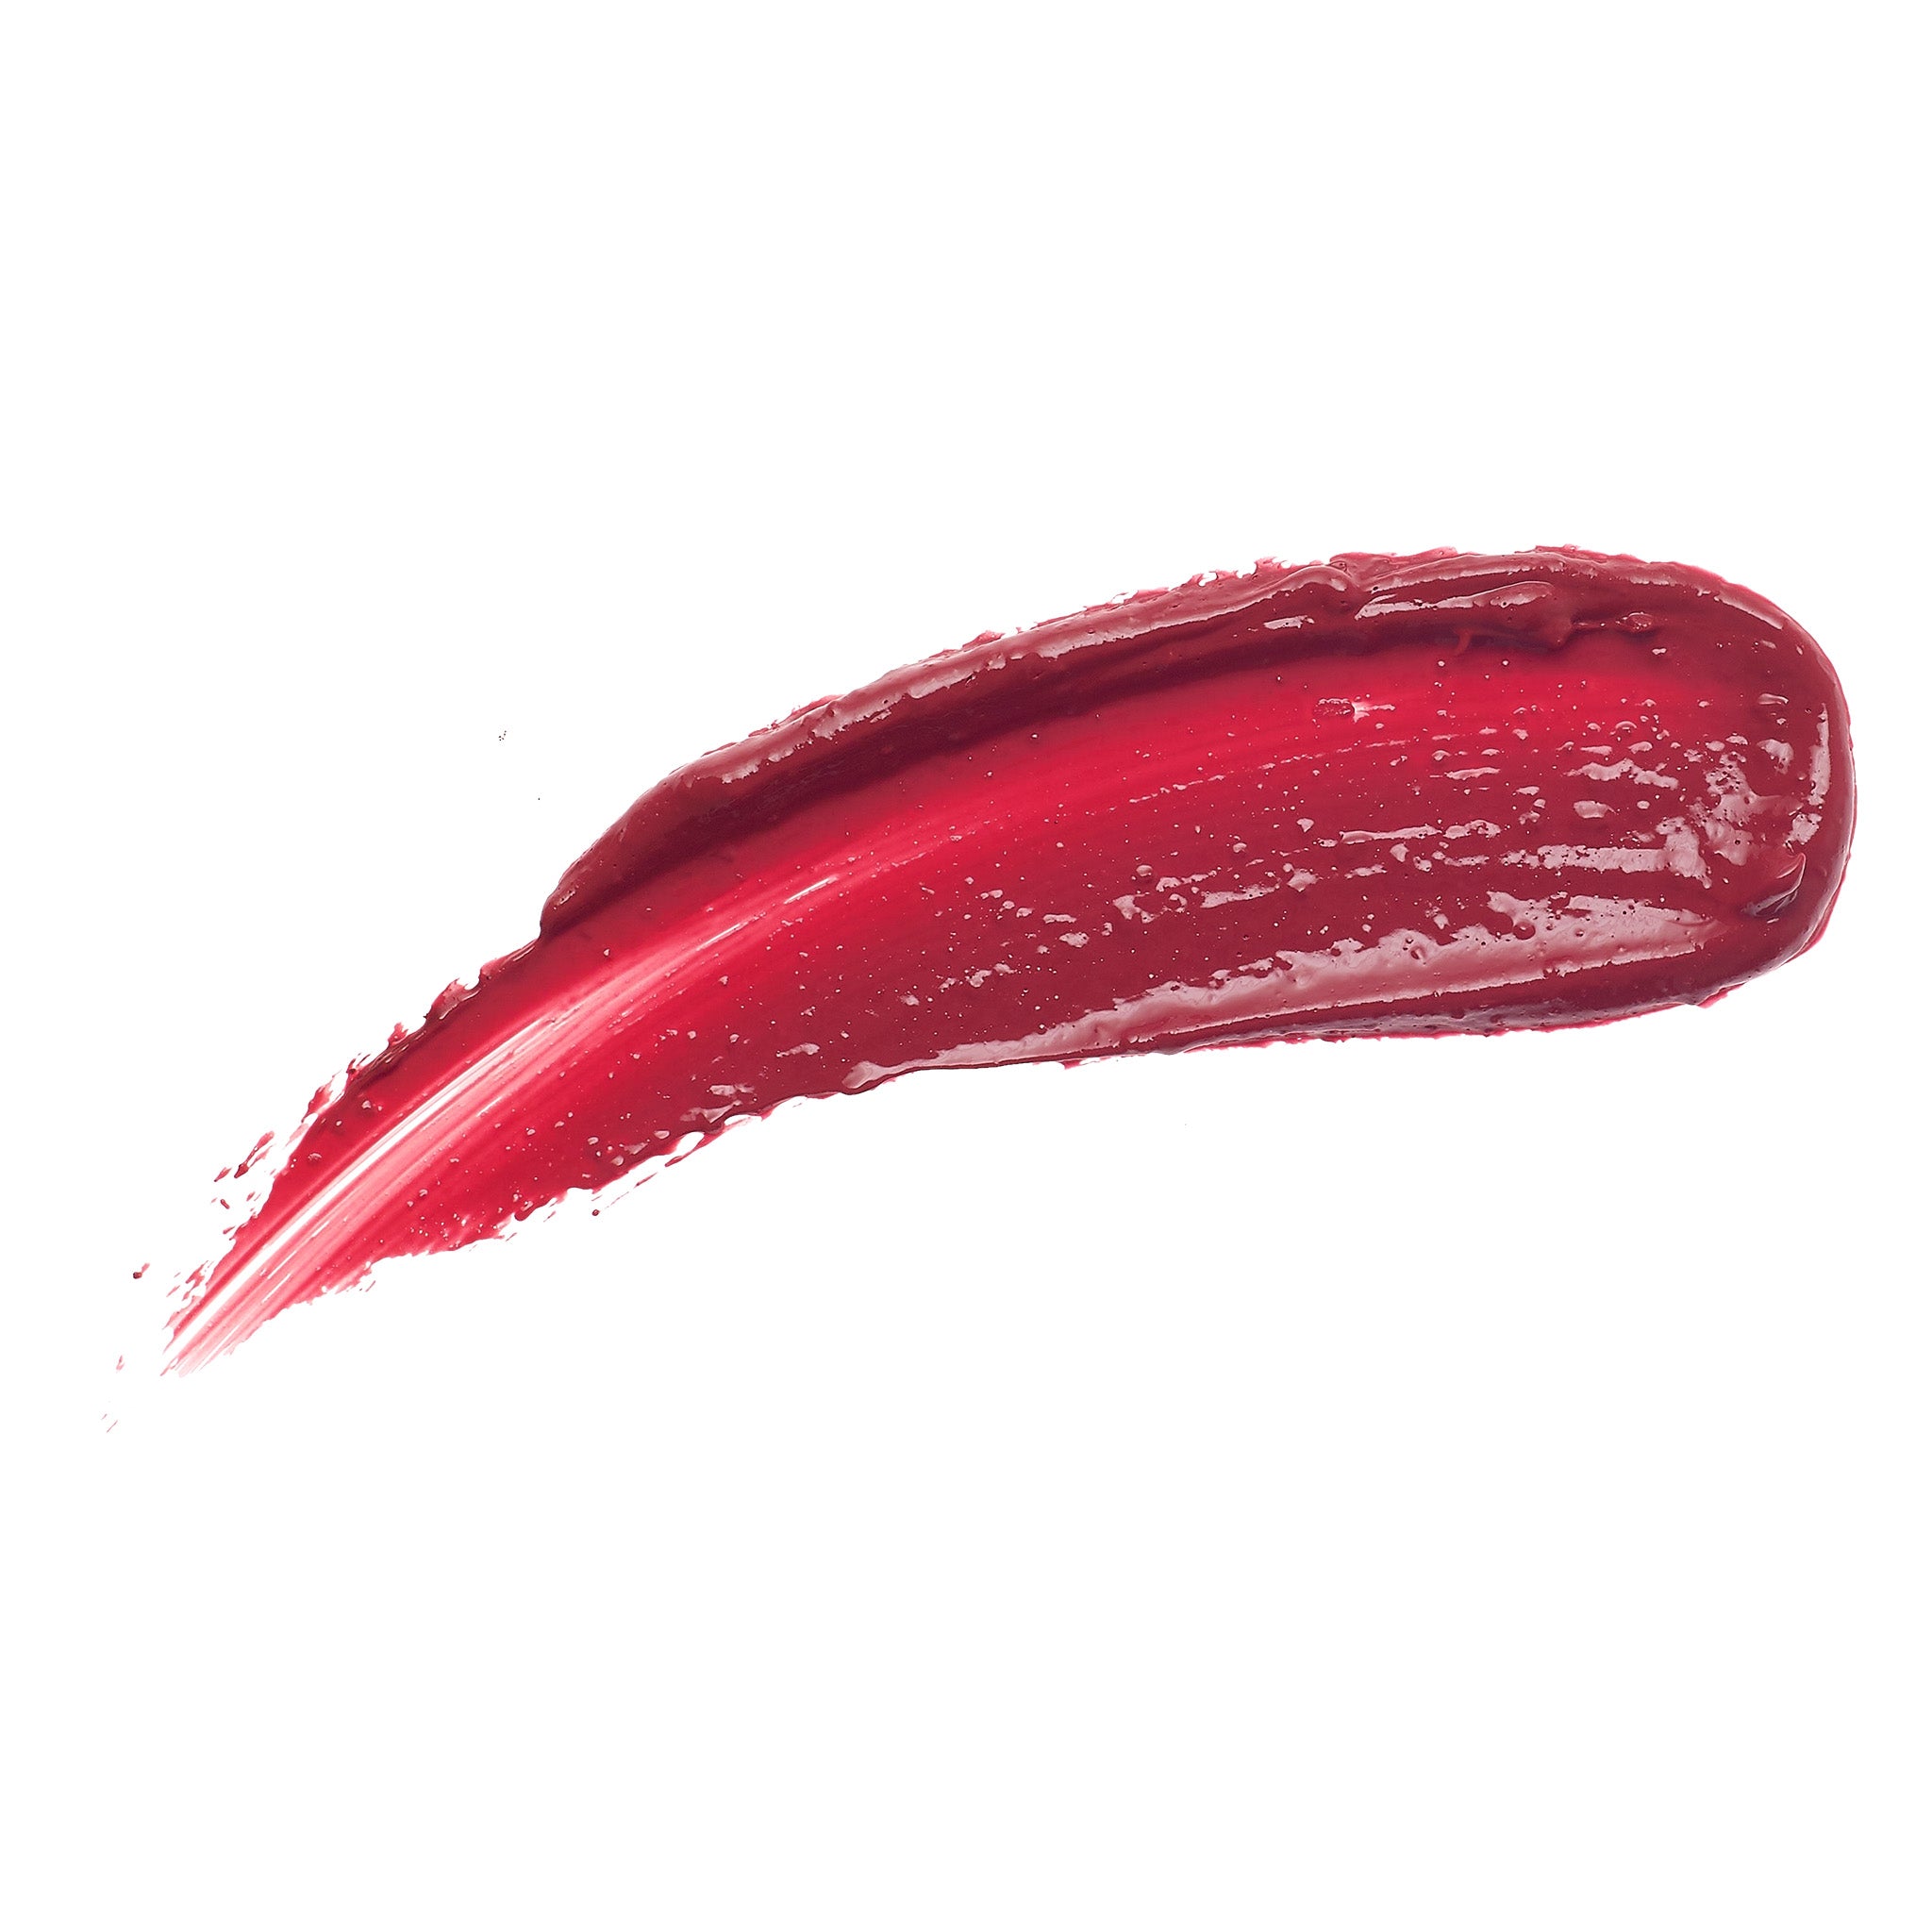 100% Natural Lip Nourish™ Cranberry Citrus Lük Beautifood